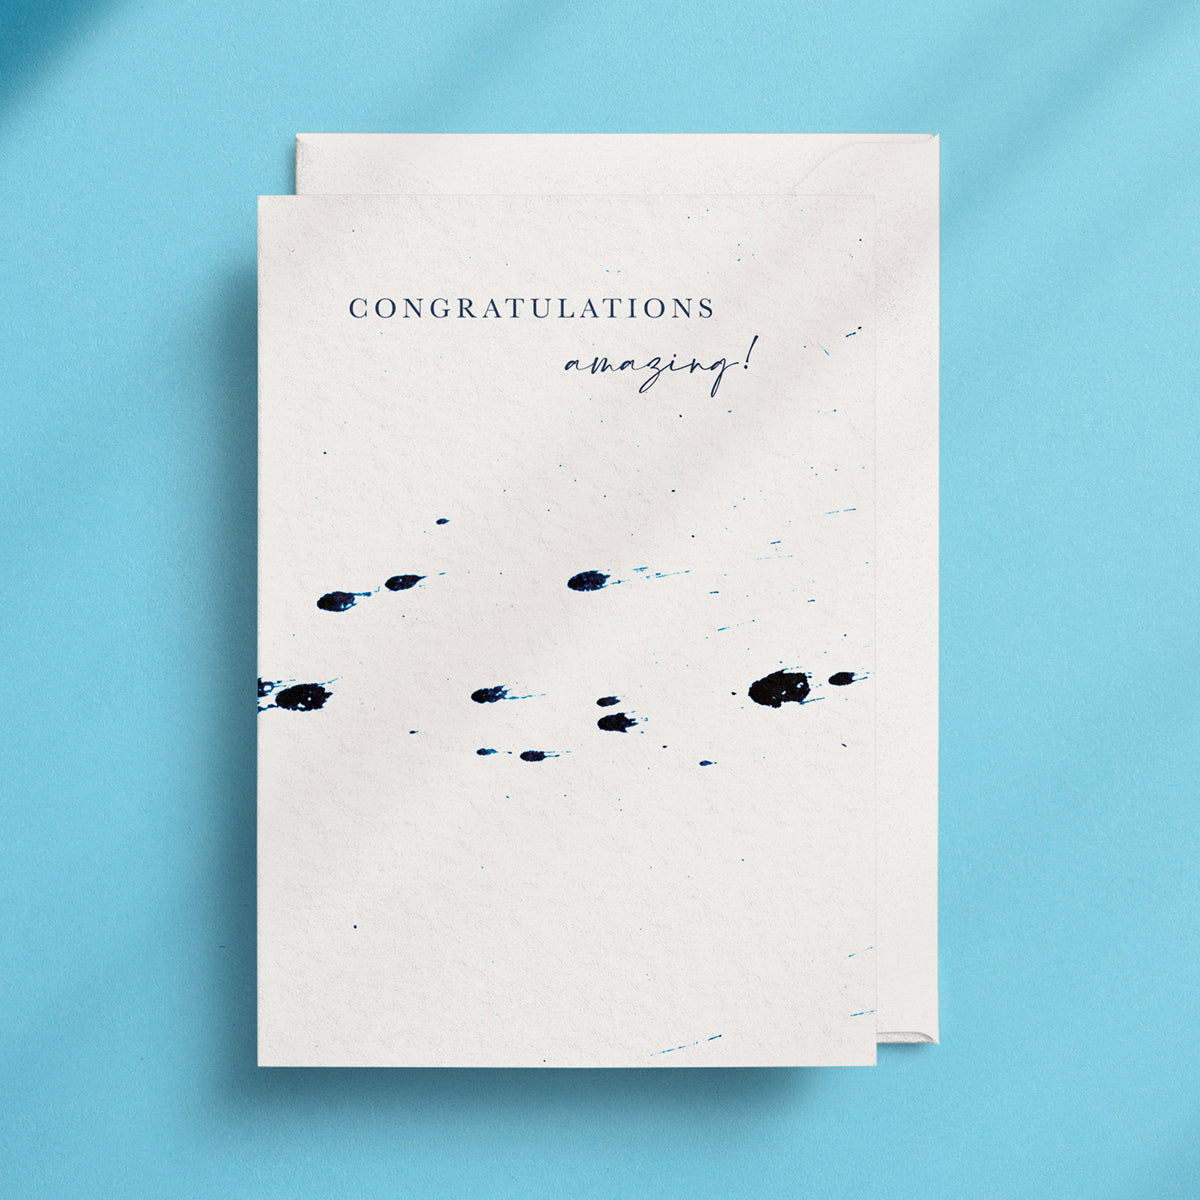 Congratulations Amazing! - Greeting Card